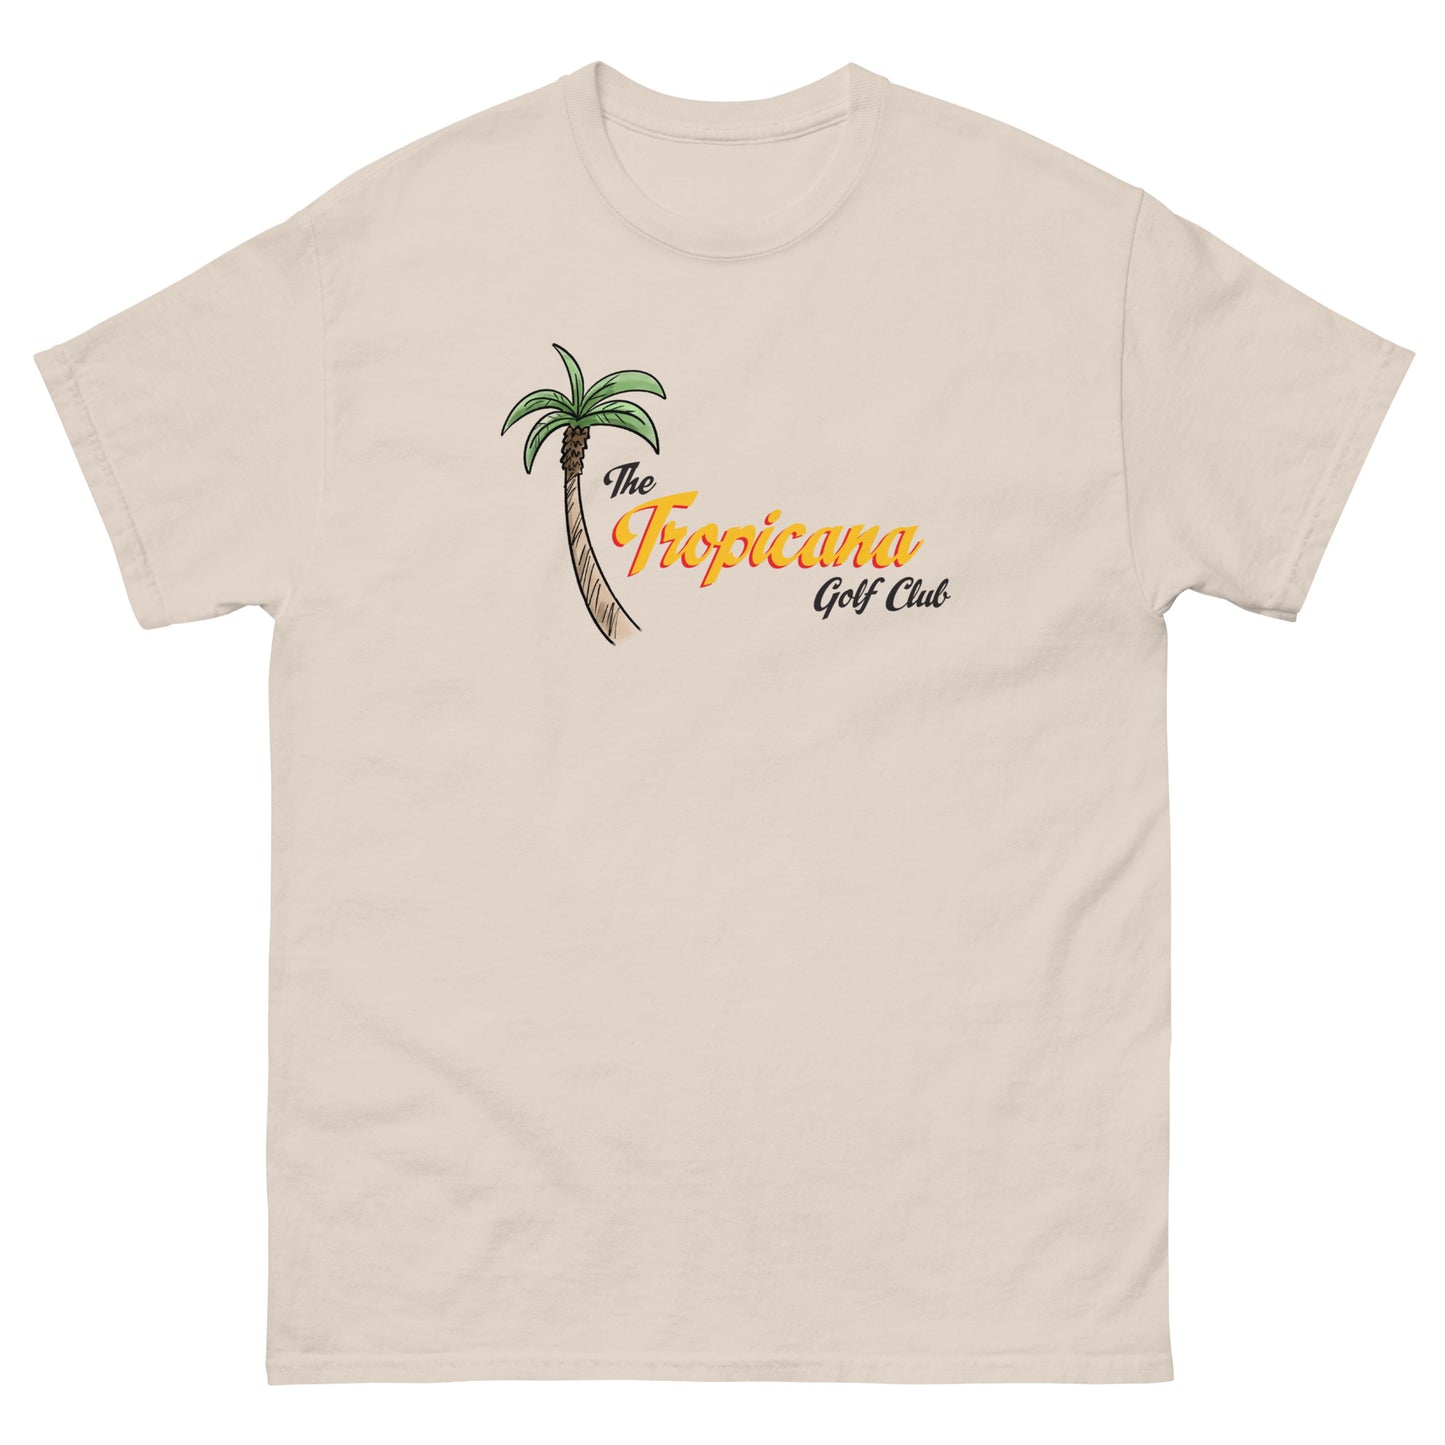 Tropicana Central Flo Palm Men's classic tee